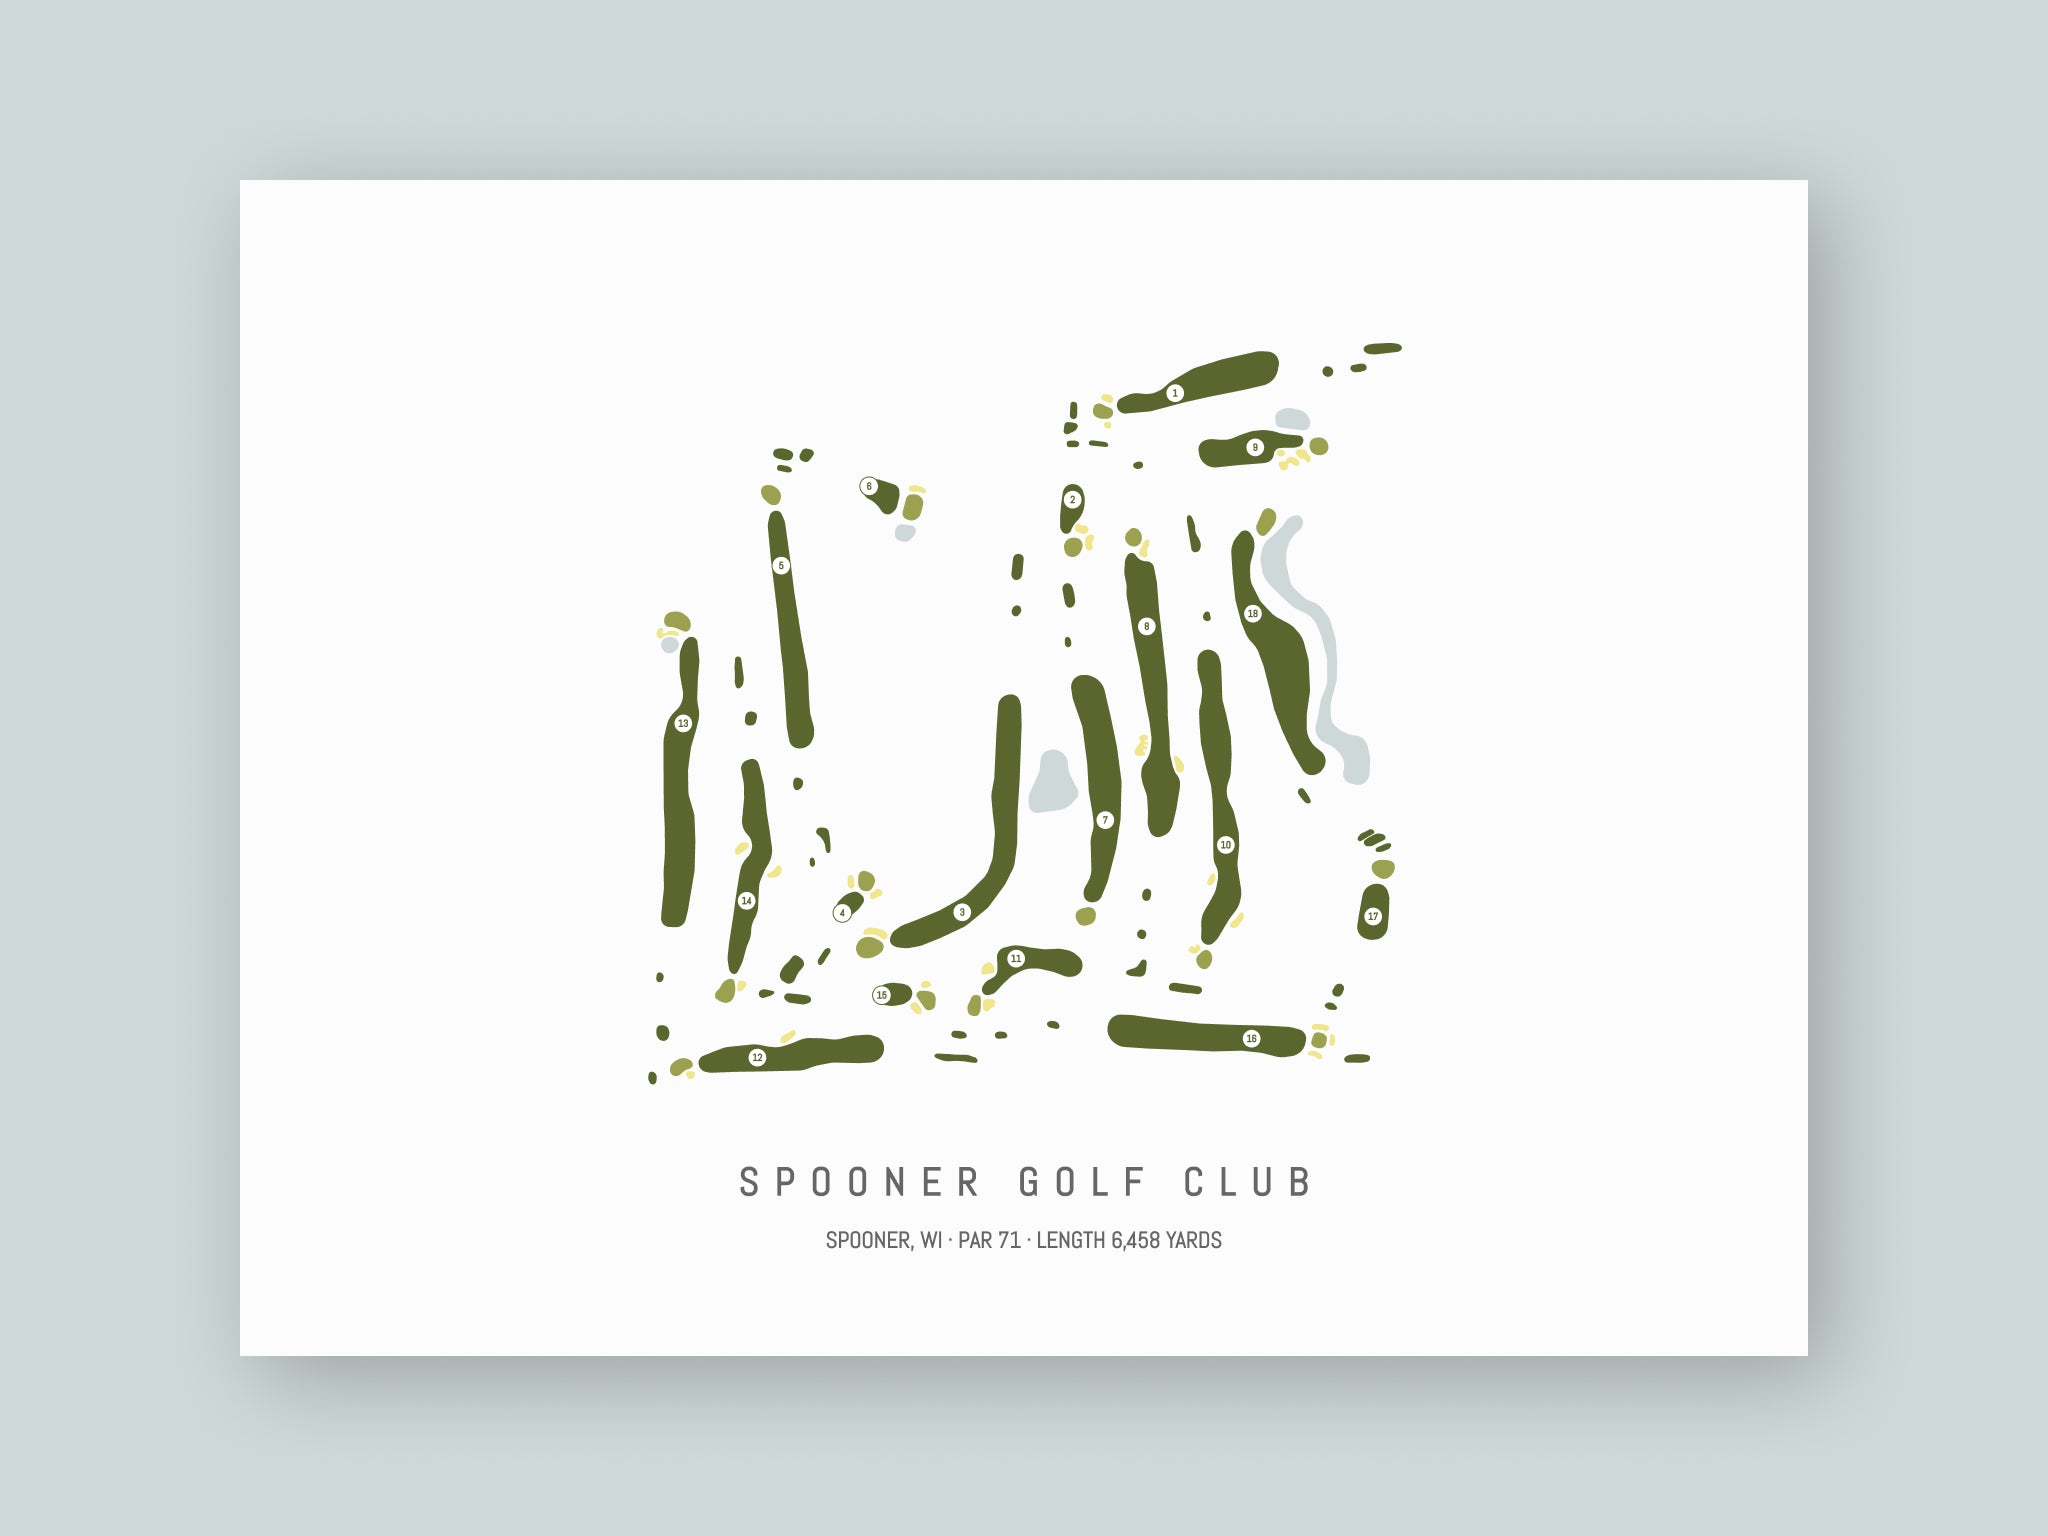 Spooner Golf Club